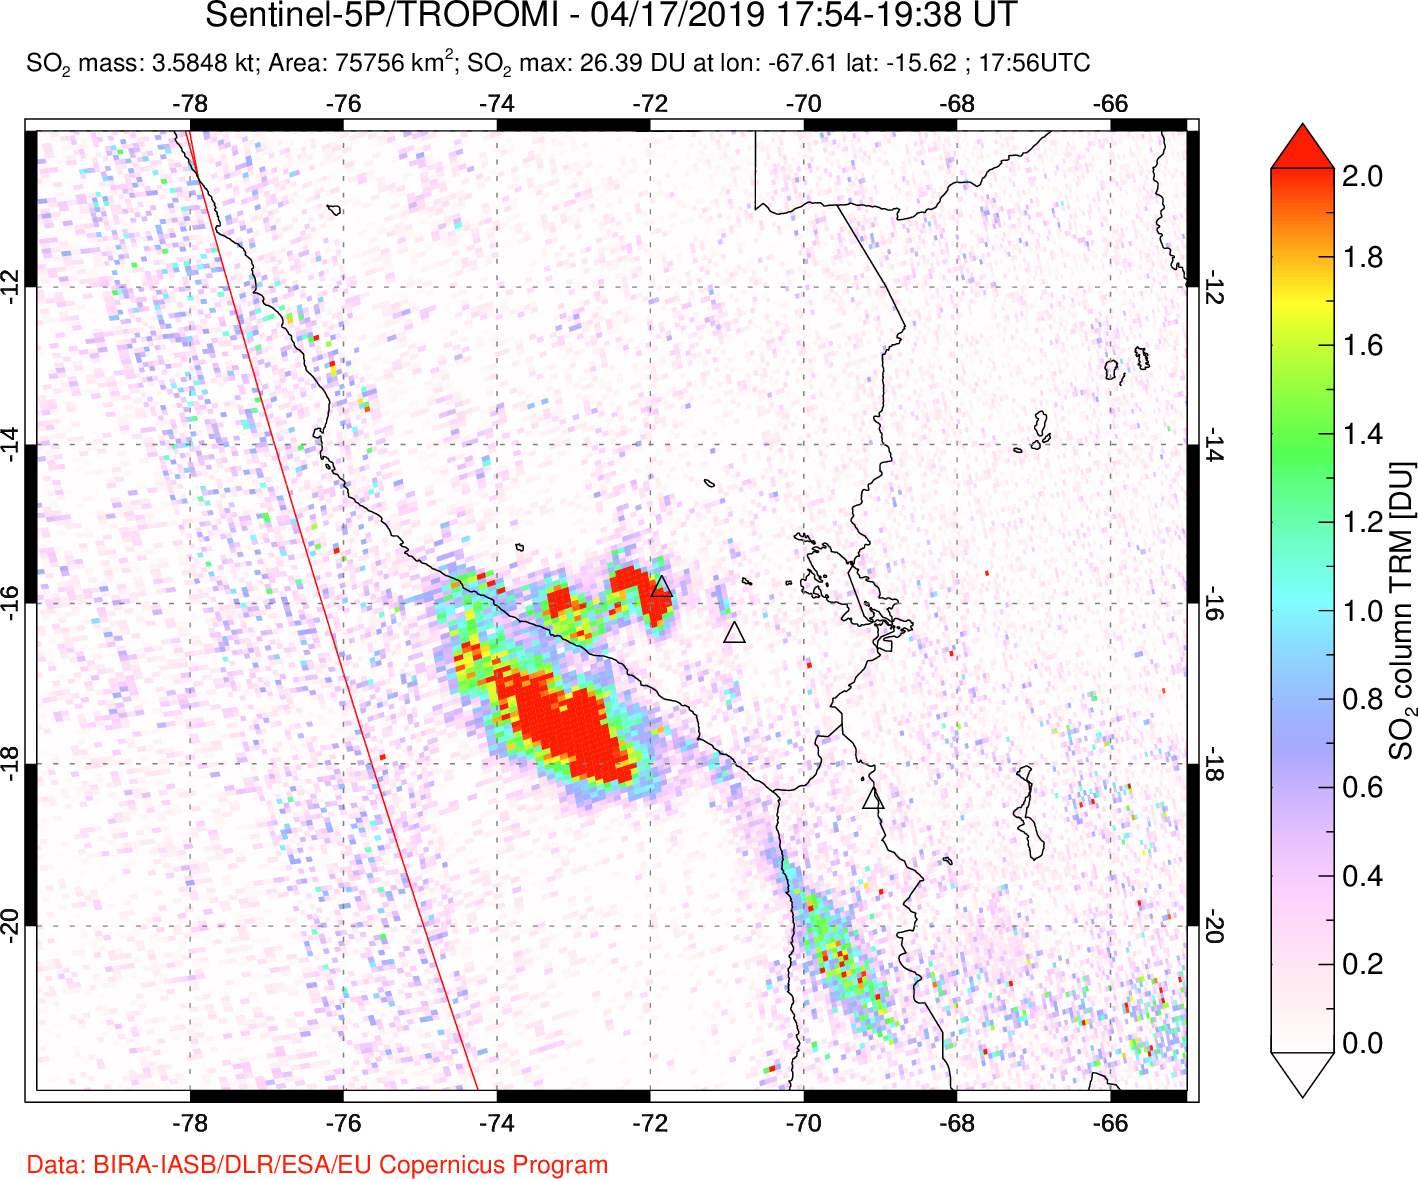 A sulfur dioxide image over Peru on Apr 17, 2019.